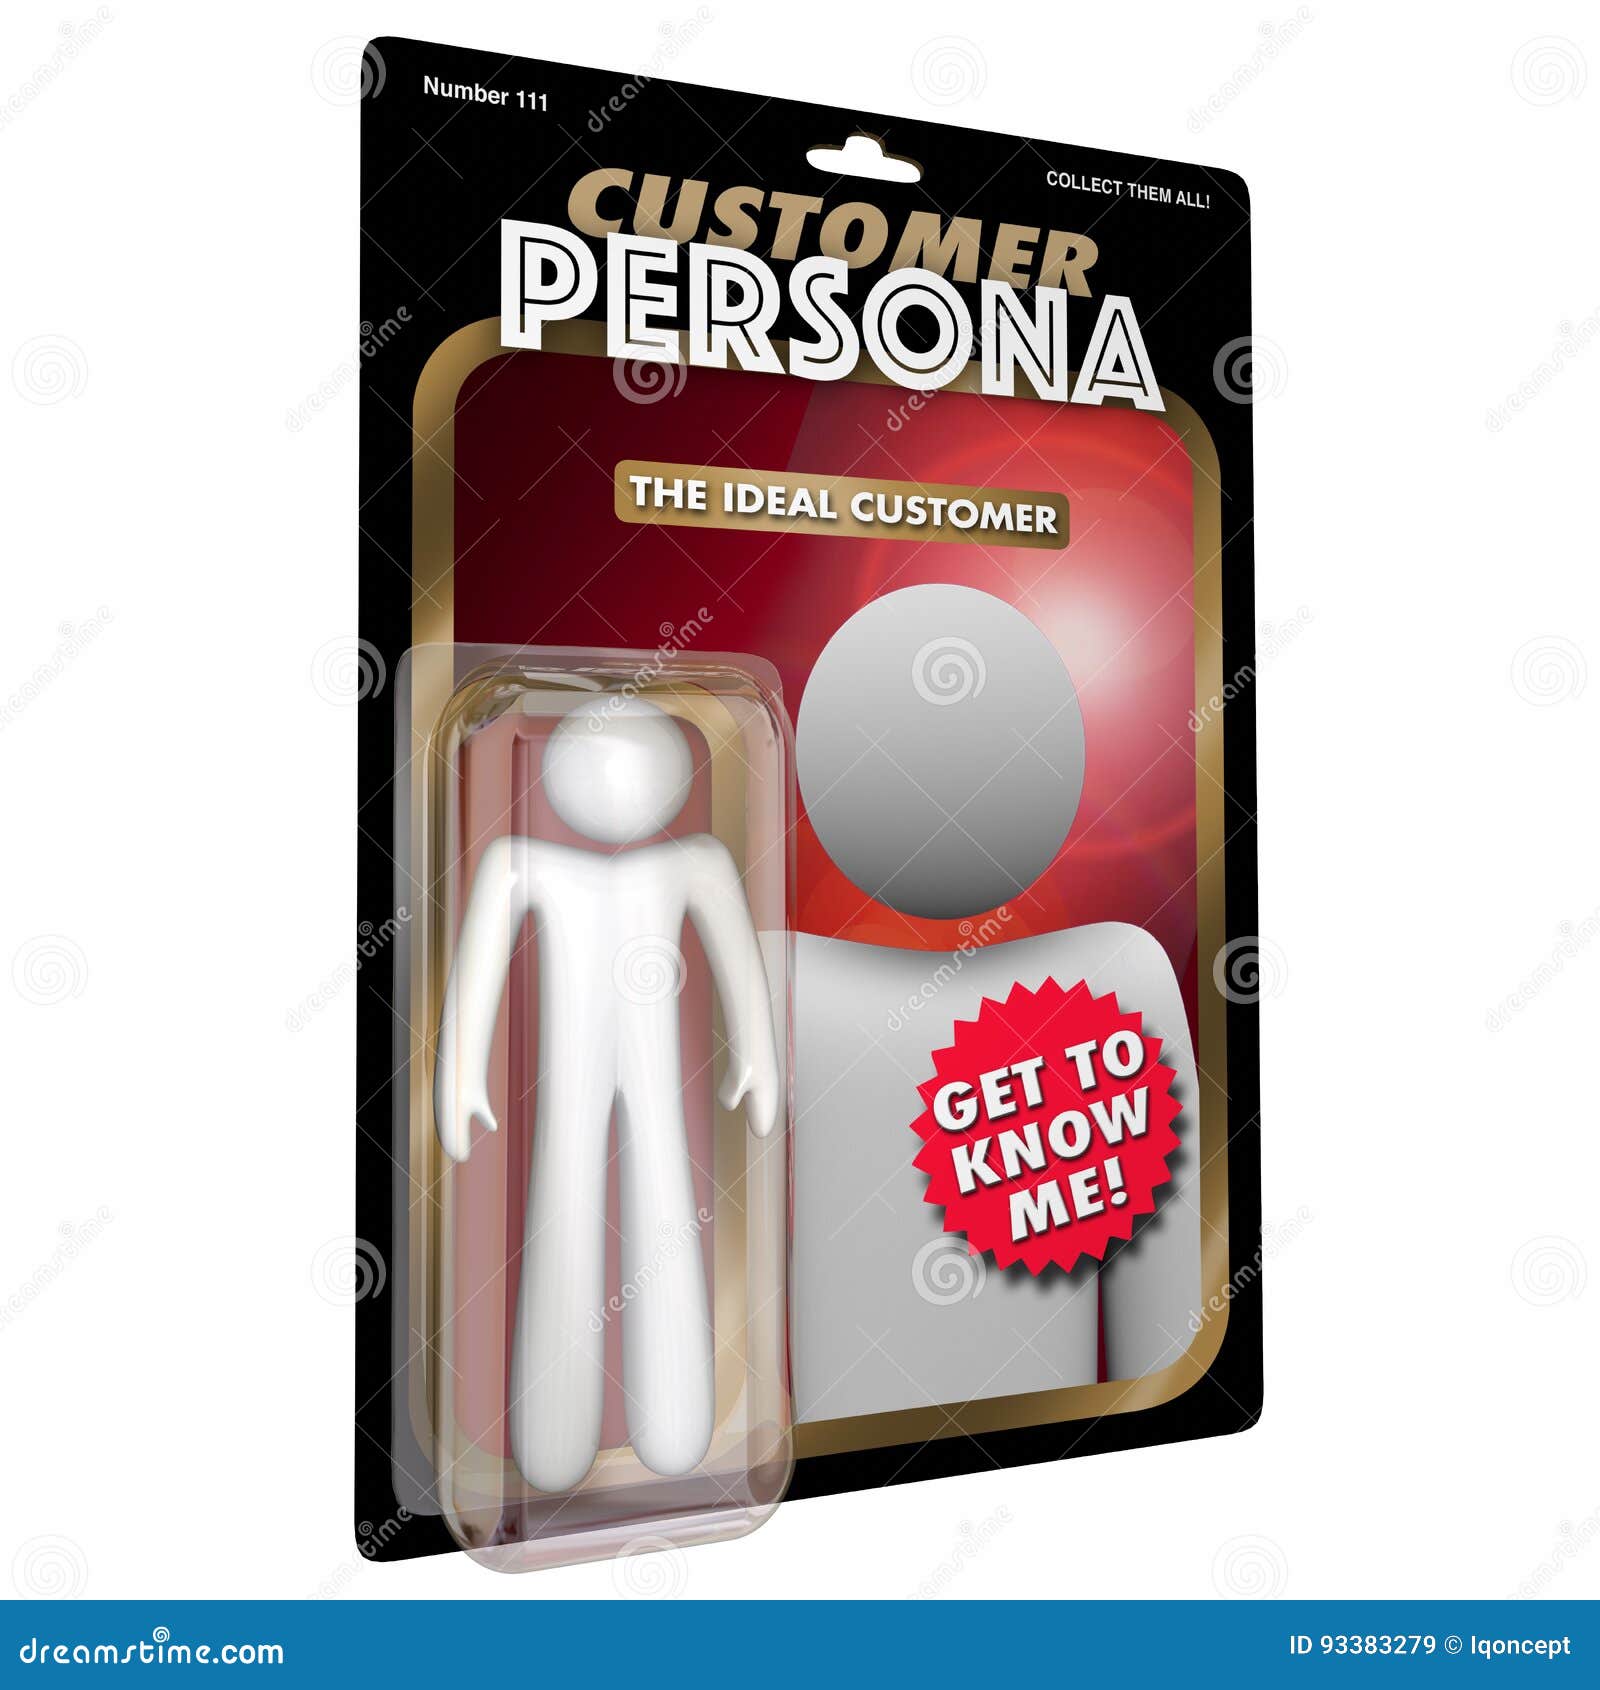 customer persona action figure buyer profile